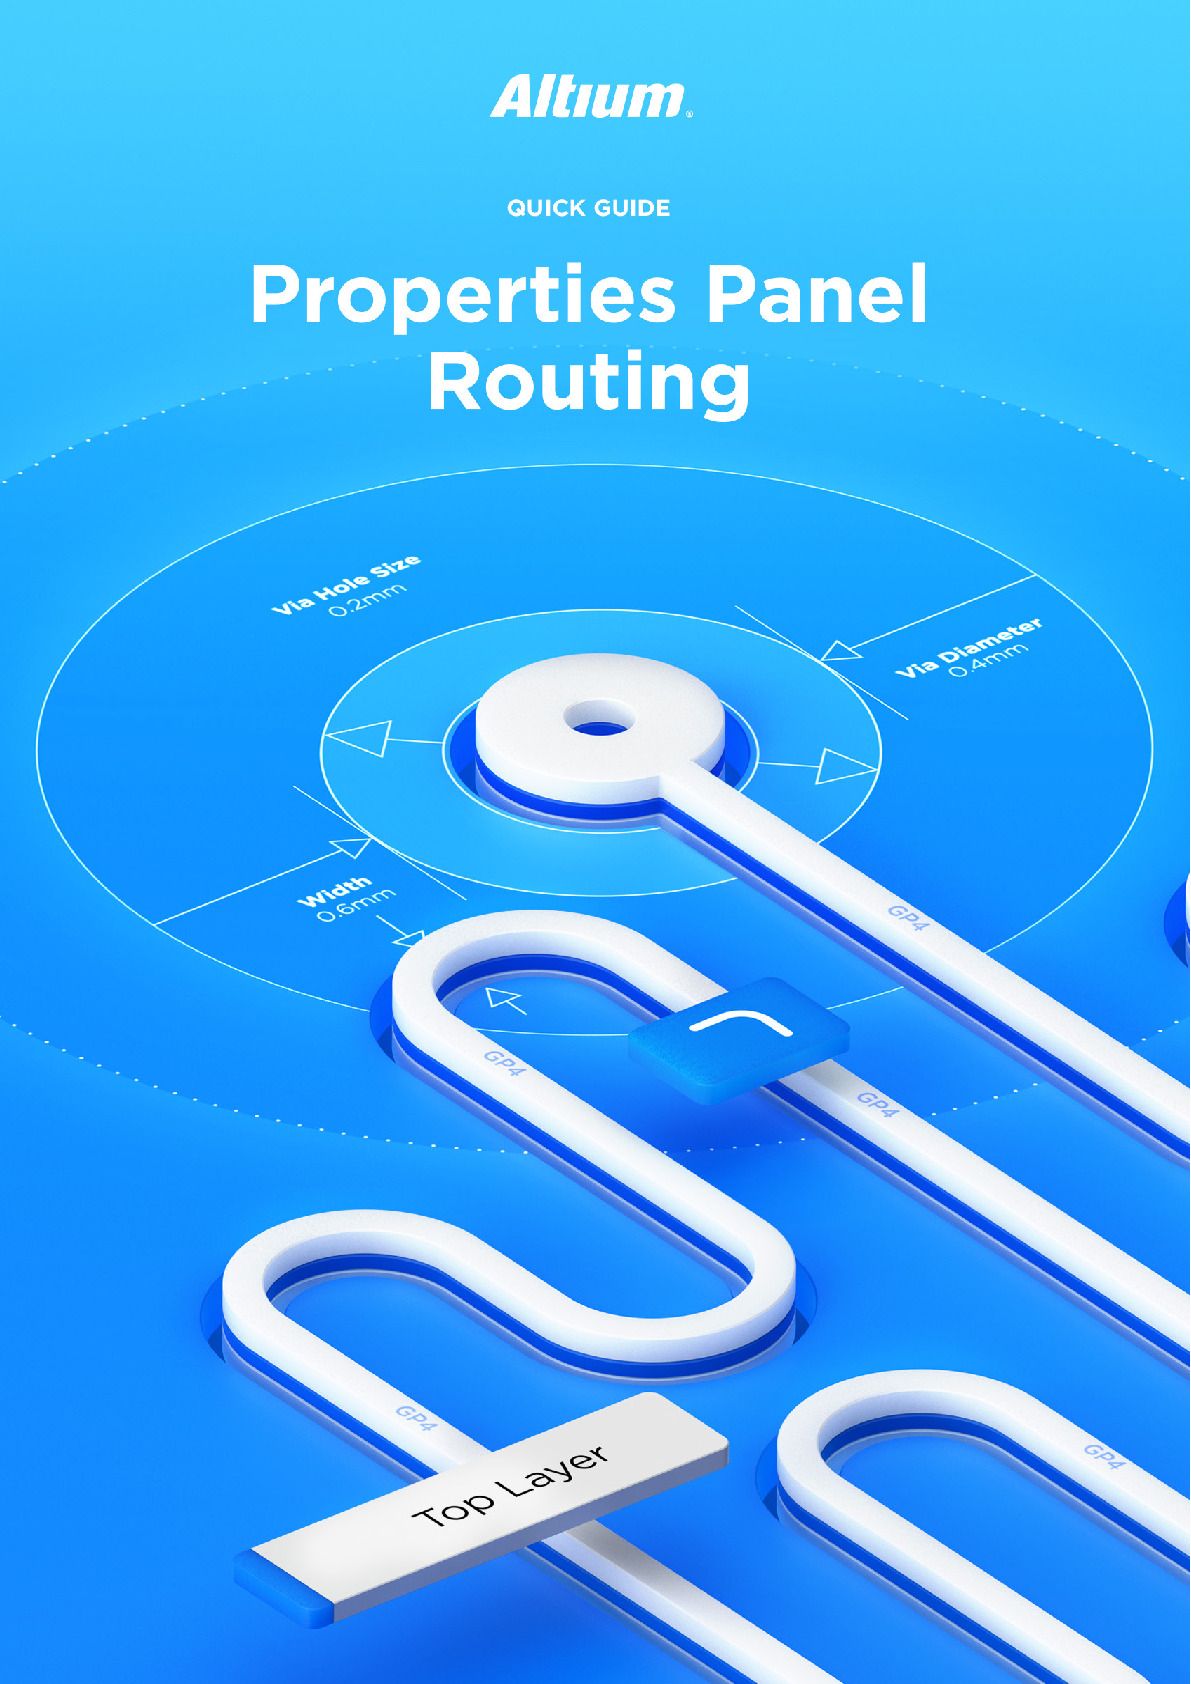 Properties panel routing